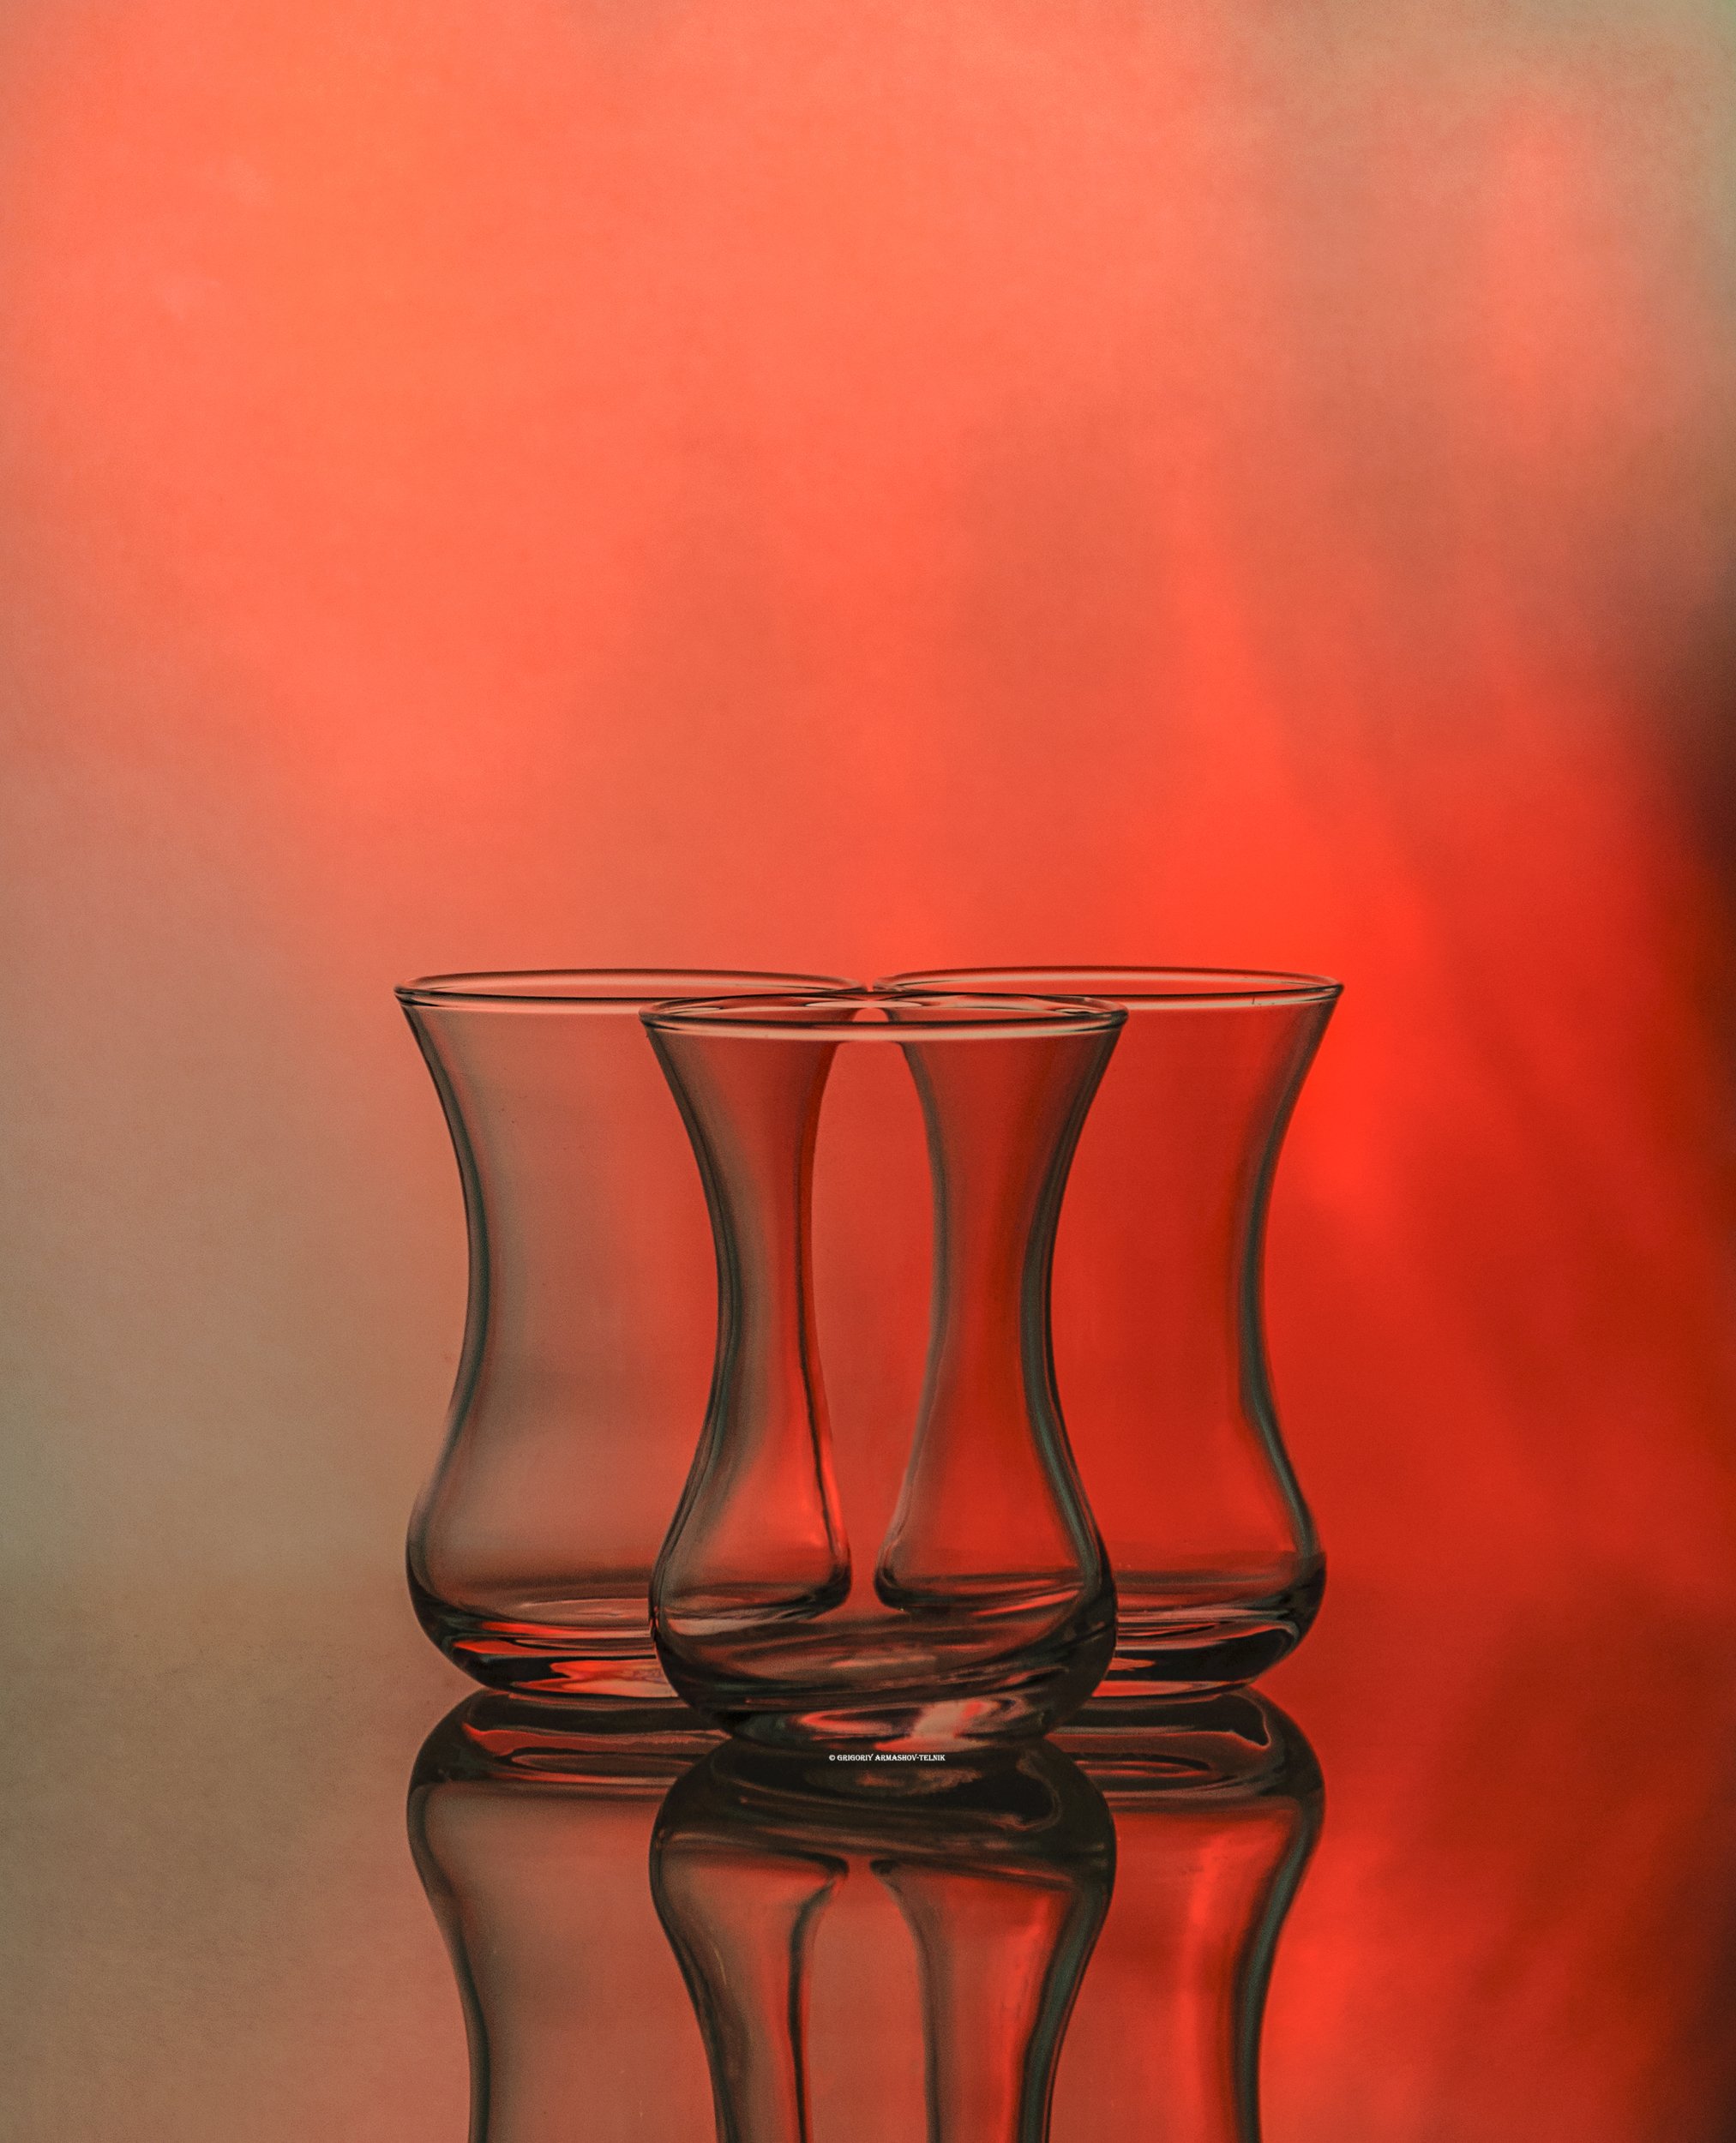 #съемкастекла #предметнаясъемка #red #reflection #glass #three #object, Армашов-Тельник Григорий